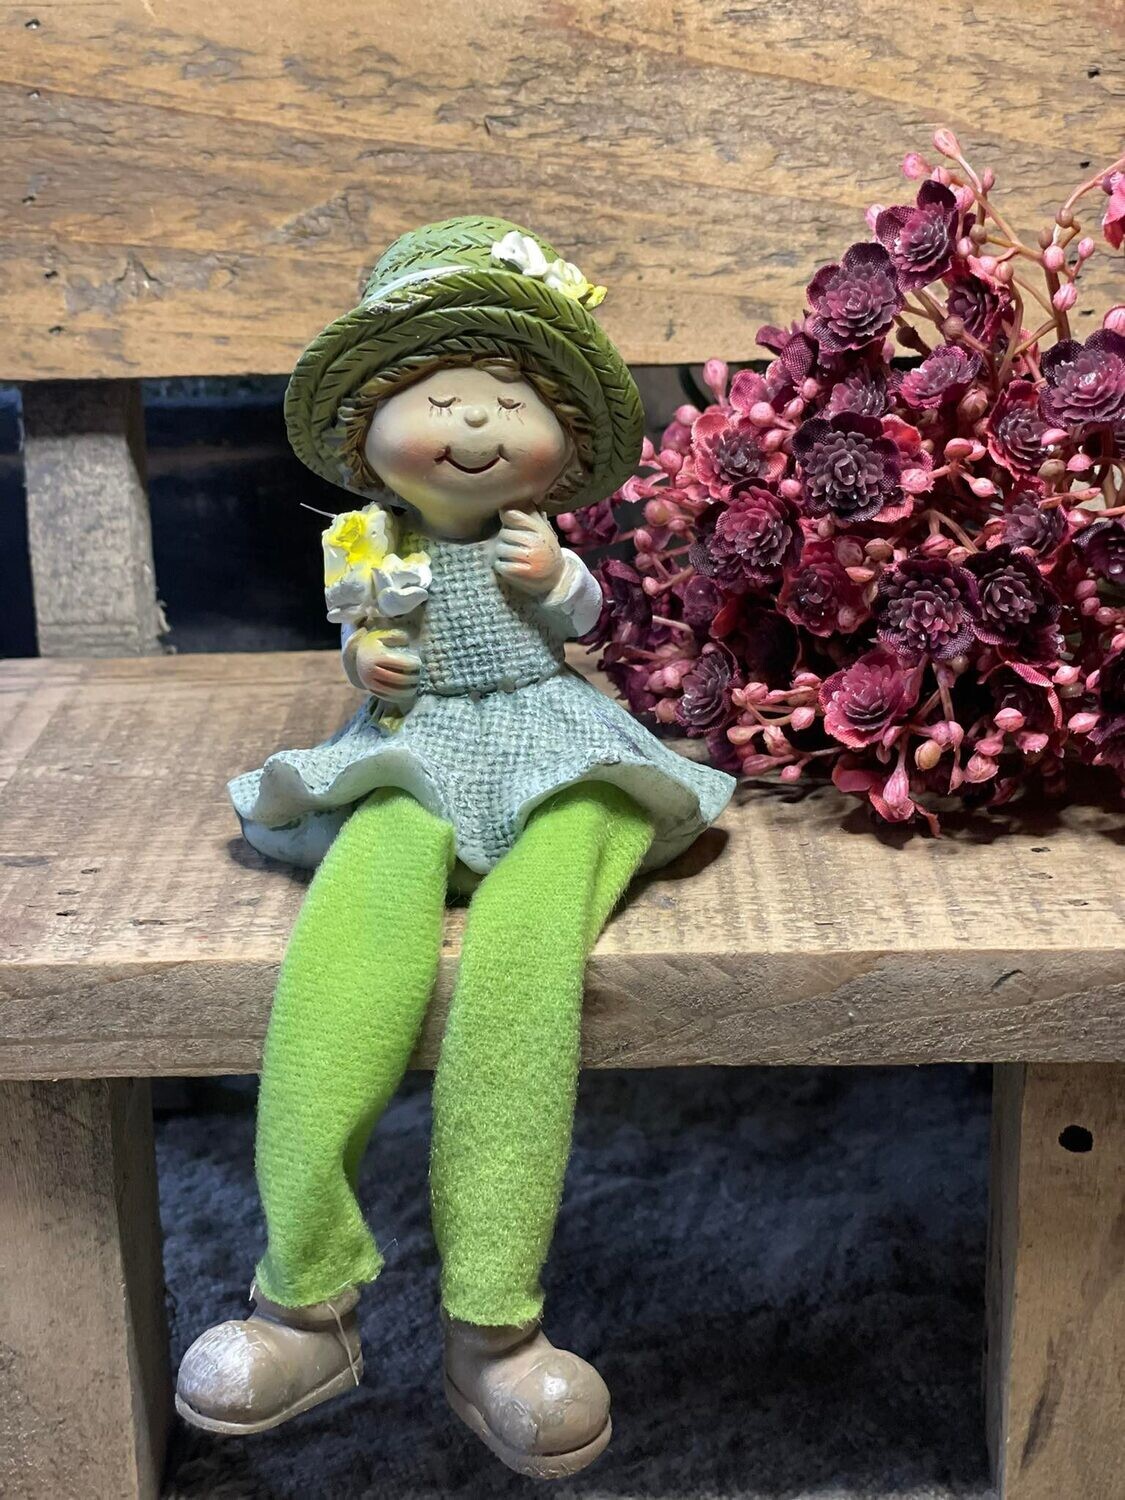 Meisje met groen jurkje en bengel beentjes